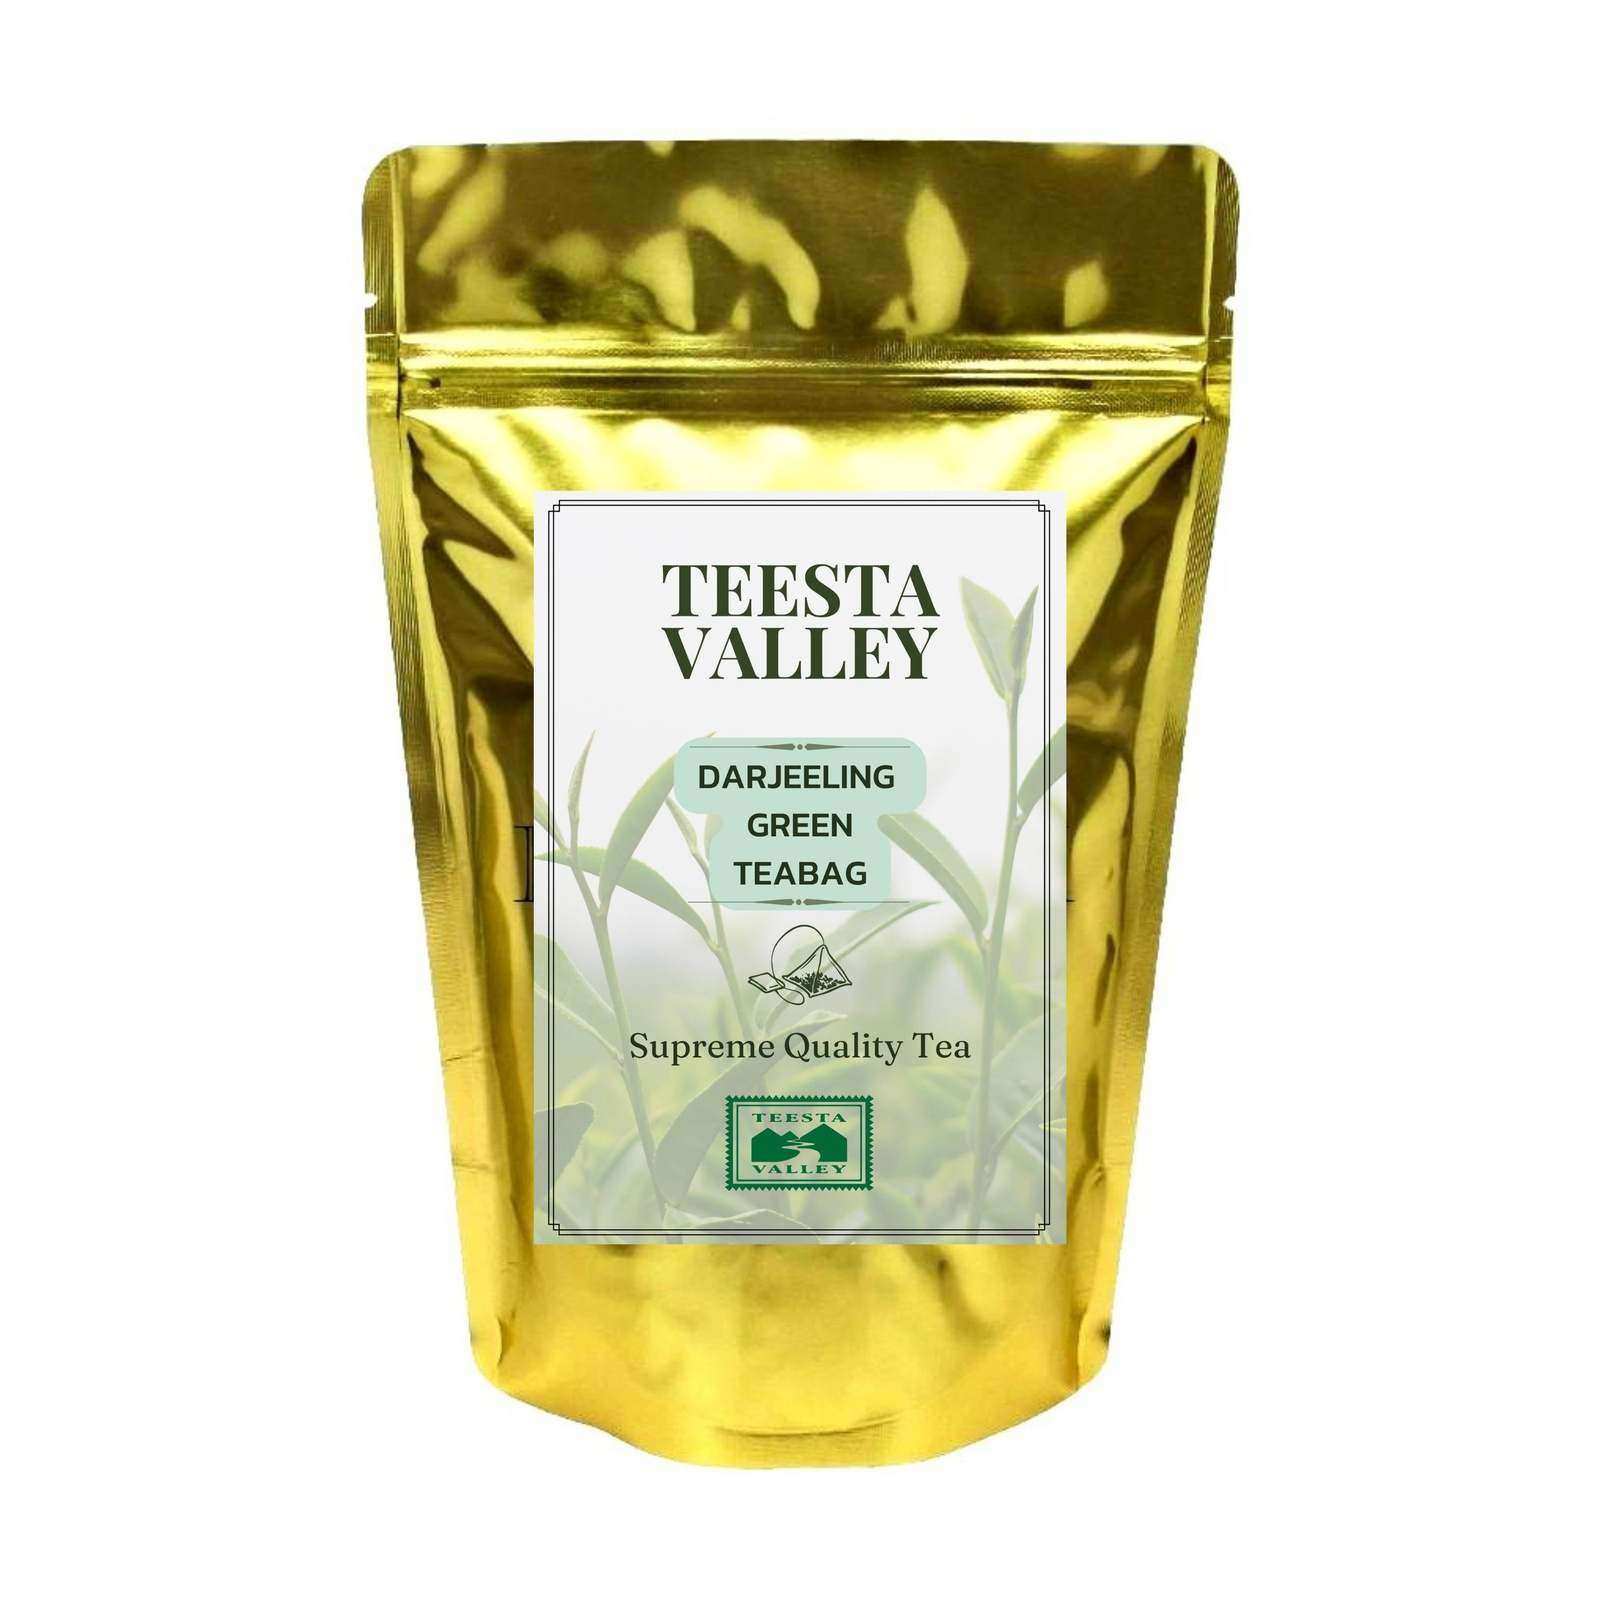 Teesta Valley Darjeeling Green Teabag - Premium Pyramid Tea bag - ZYANNA® India - zyanna.com